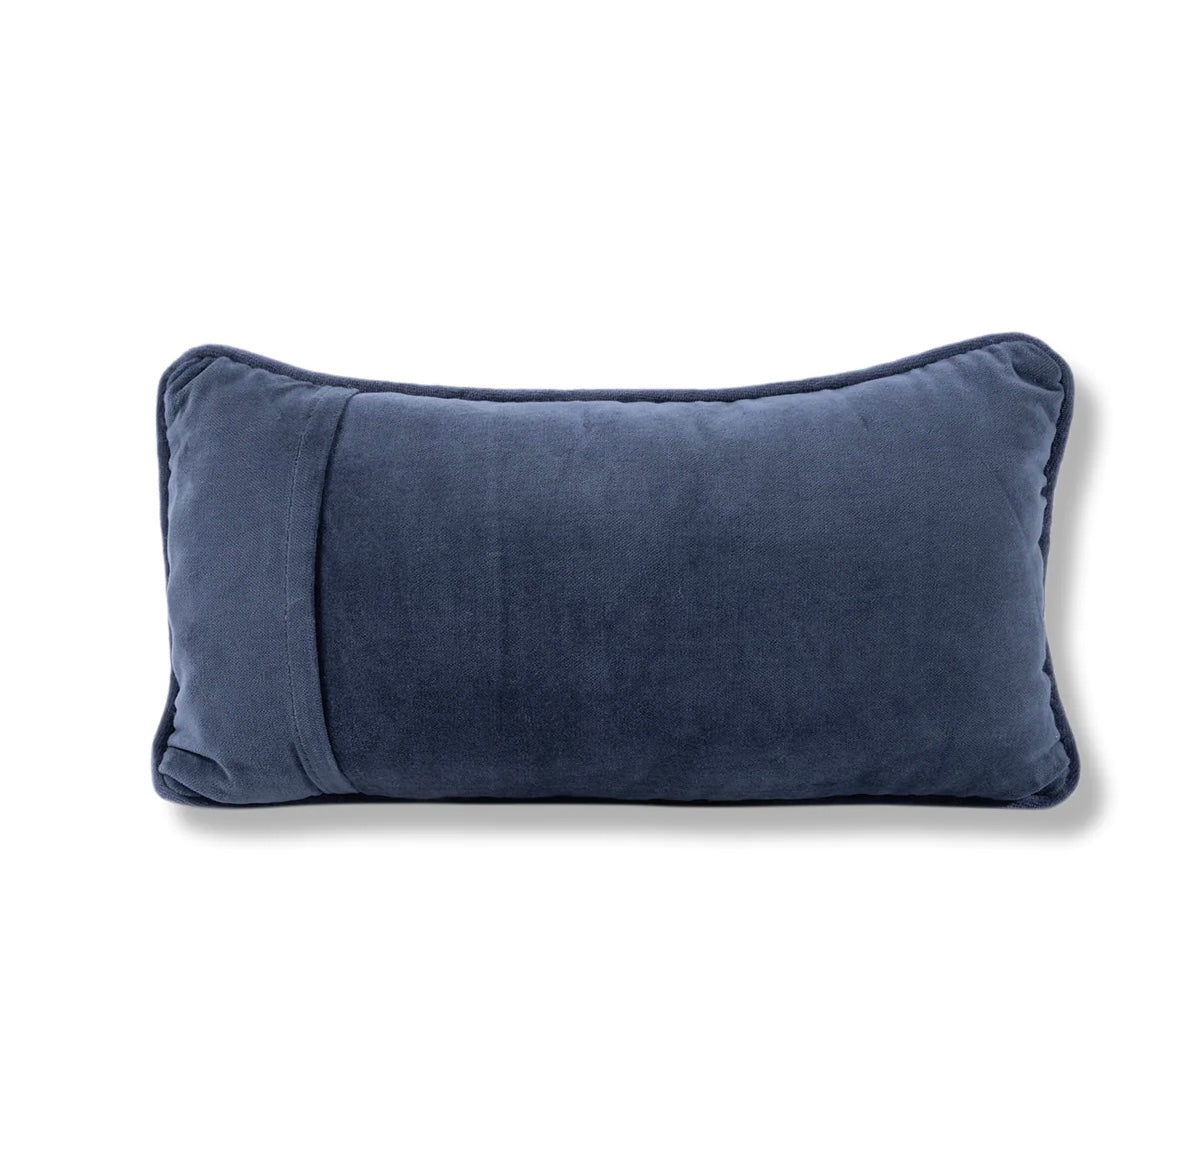 Furbish: Reservations Needlepoint Pillow